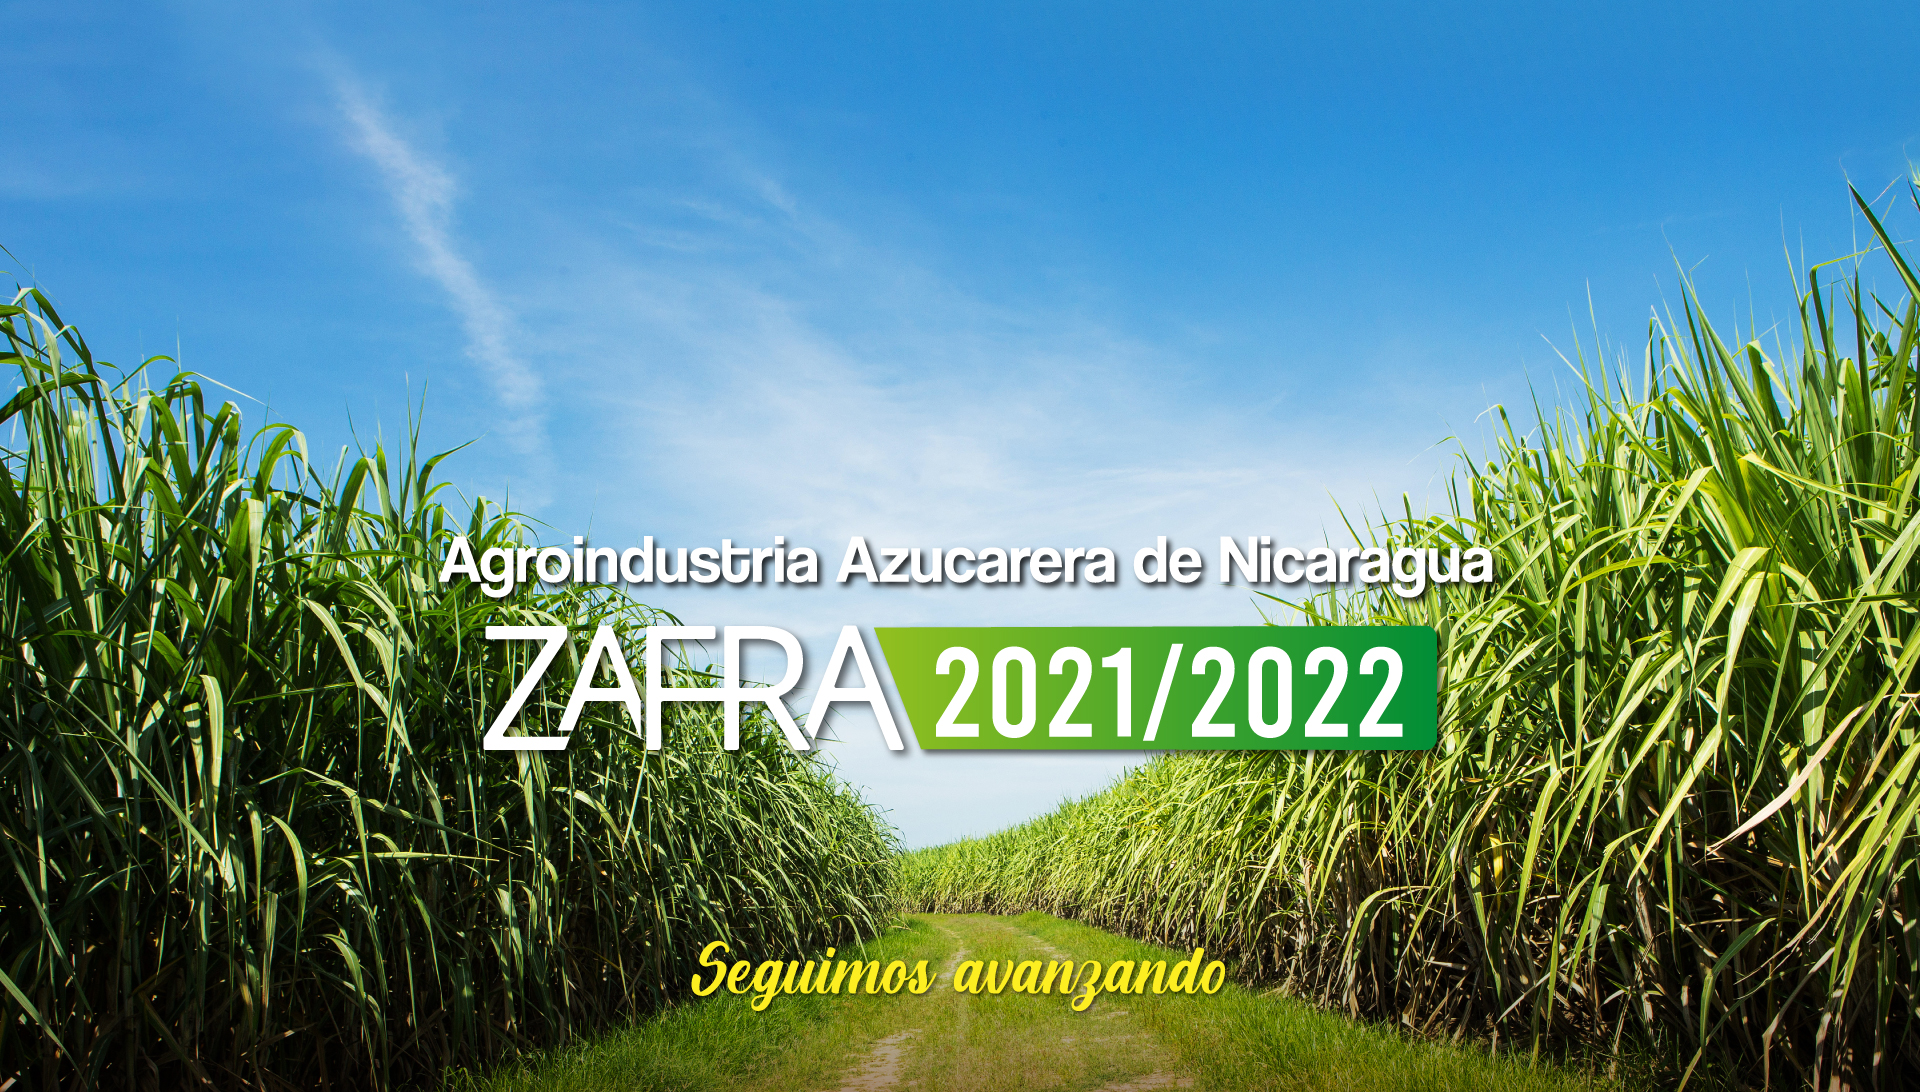 Inicio-Zafra-2021-2022_prueba